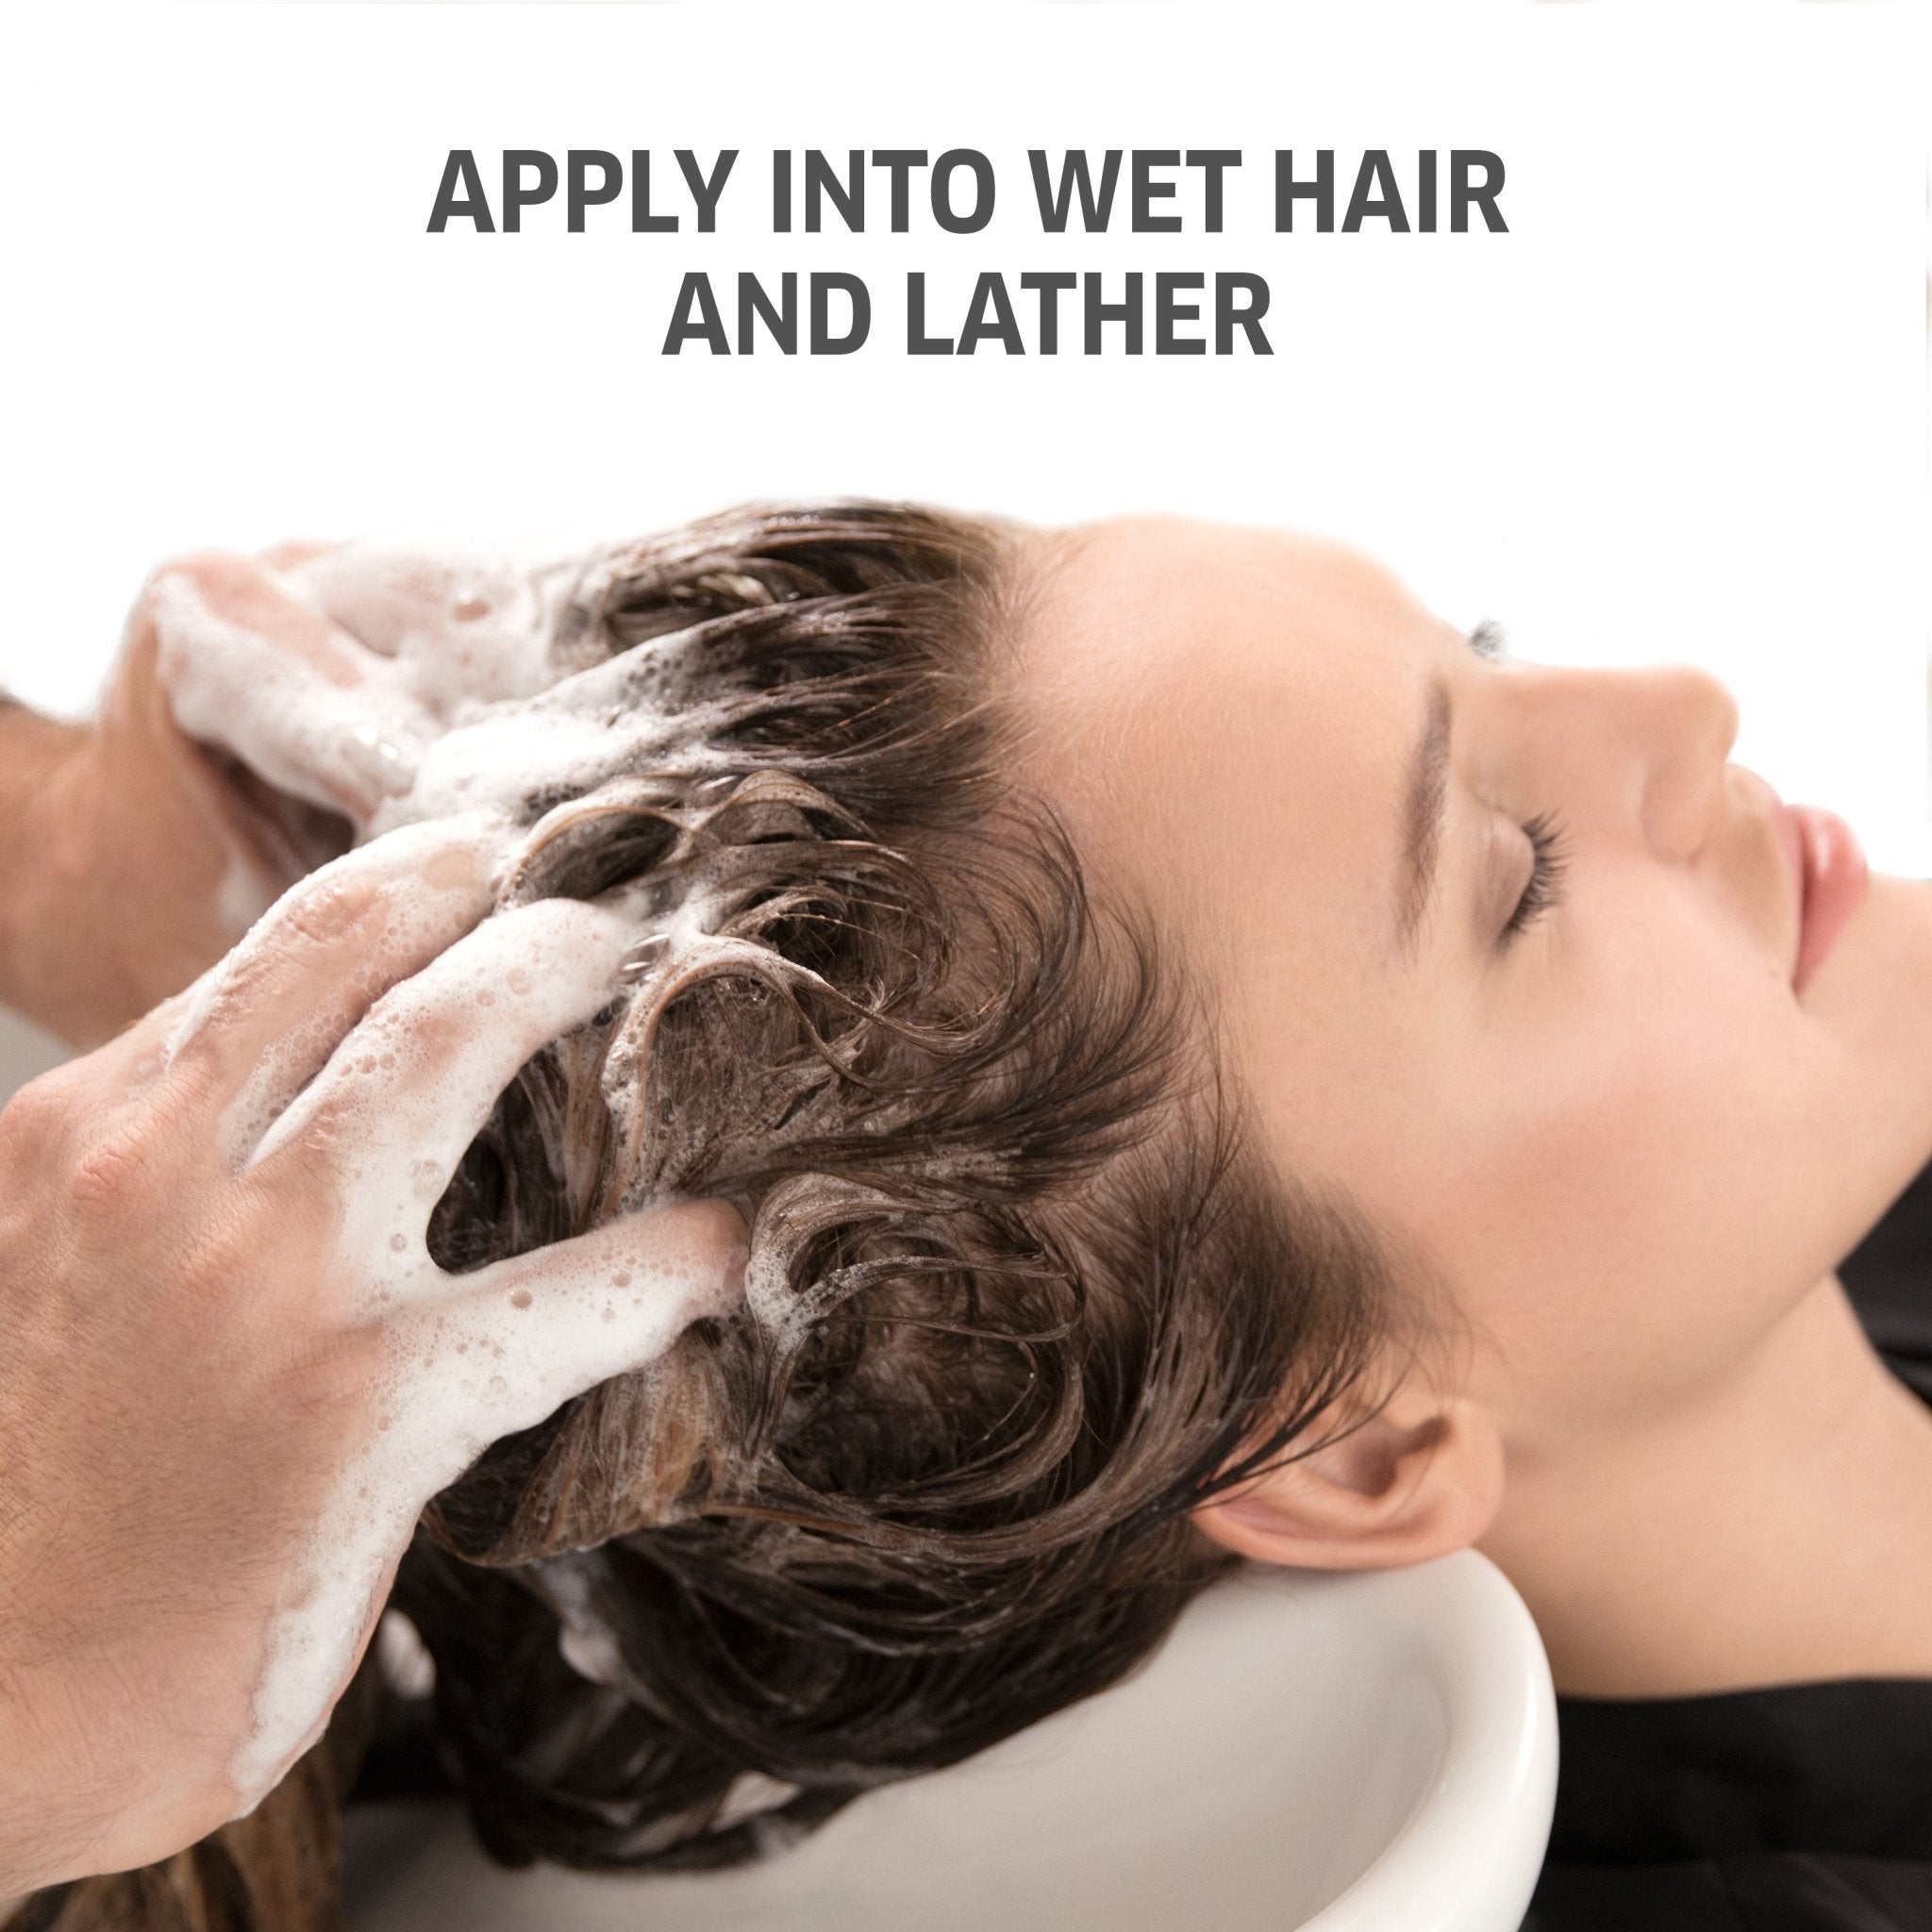 Aqua Pure Purifying Shampoo | INVIGO | WELLA - SH Salons